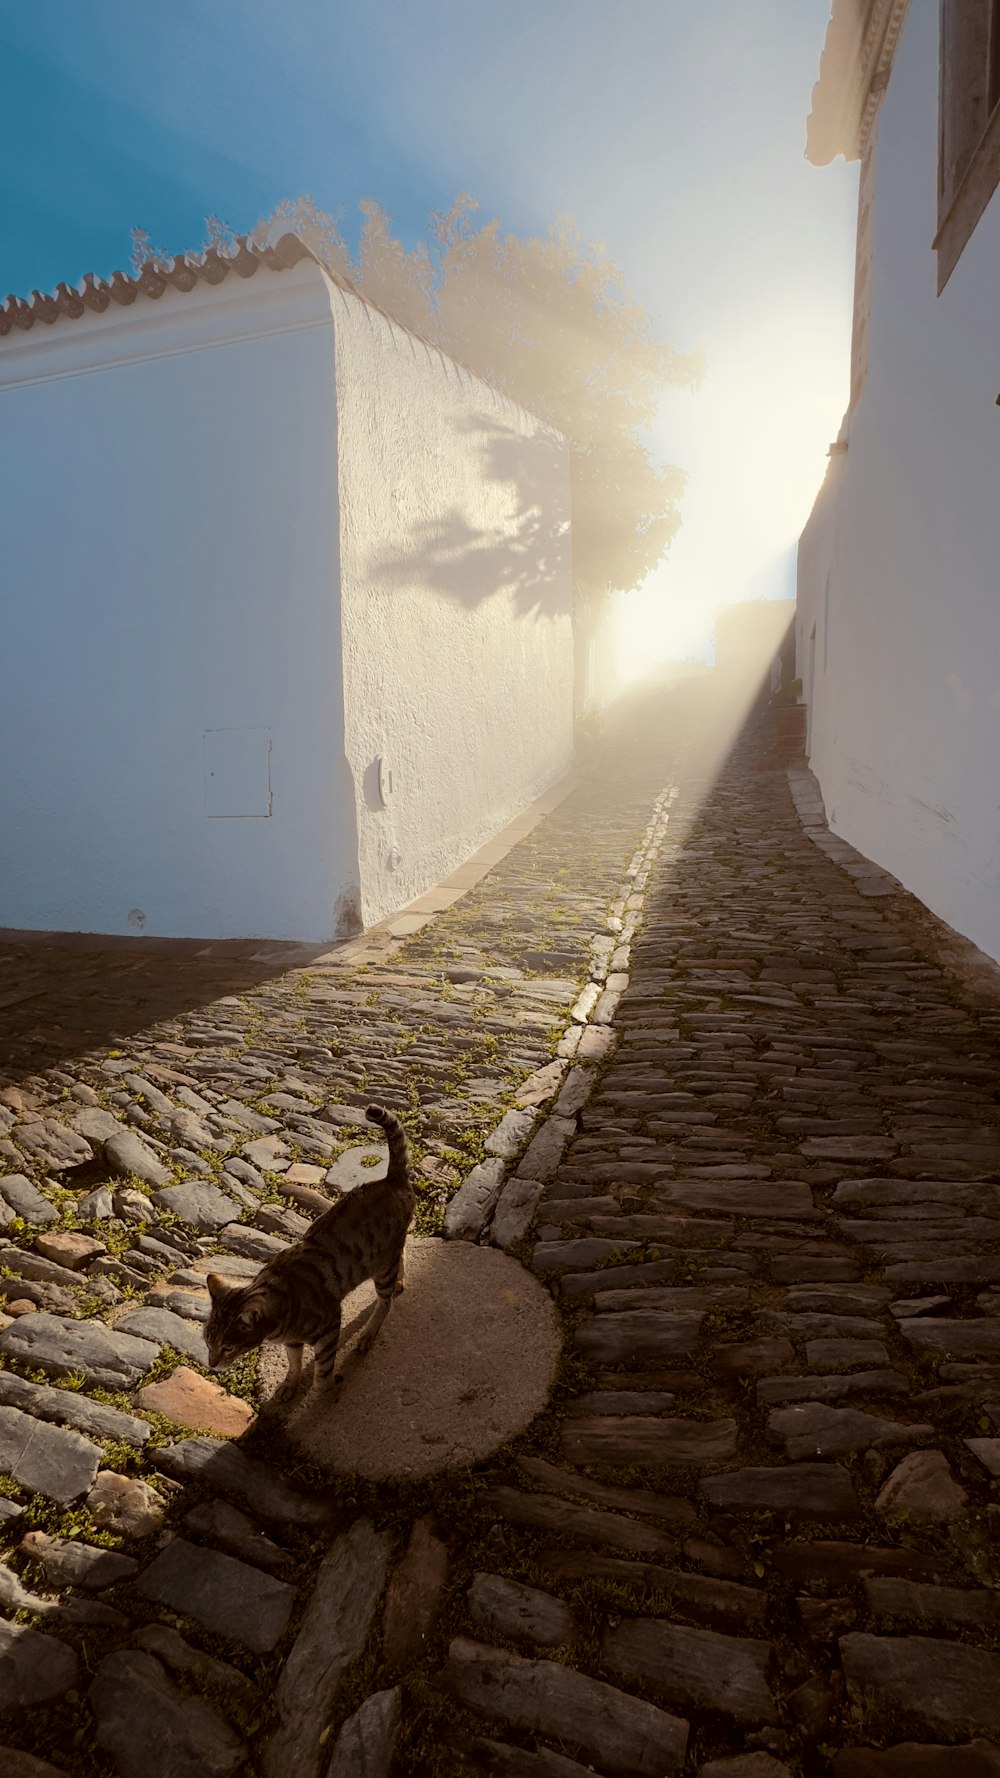 a cat walking down a cobblestone street